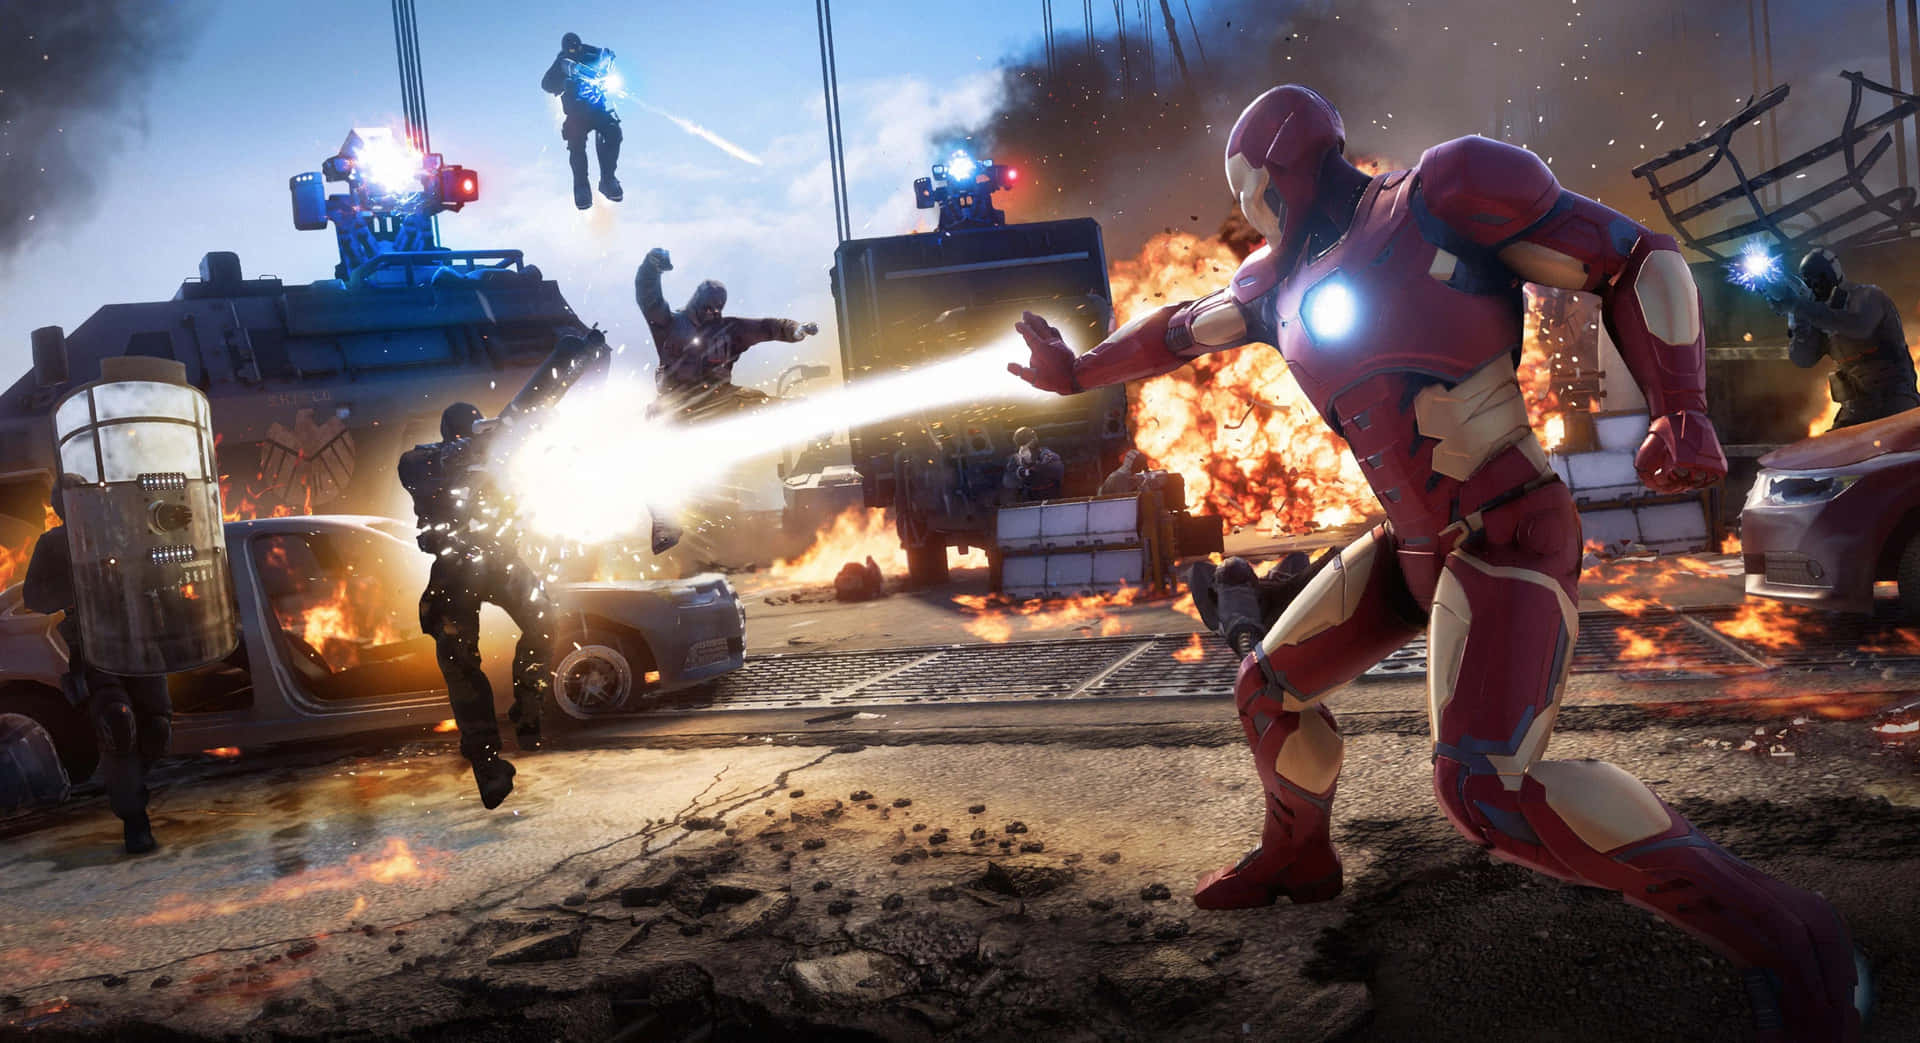 Epic Superhero Battle in a Video Game Wallpaper